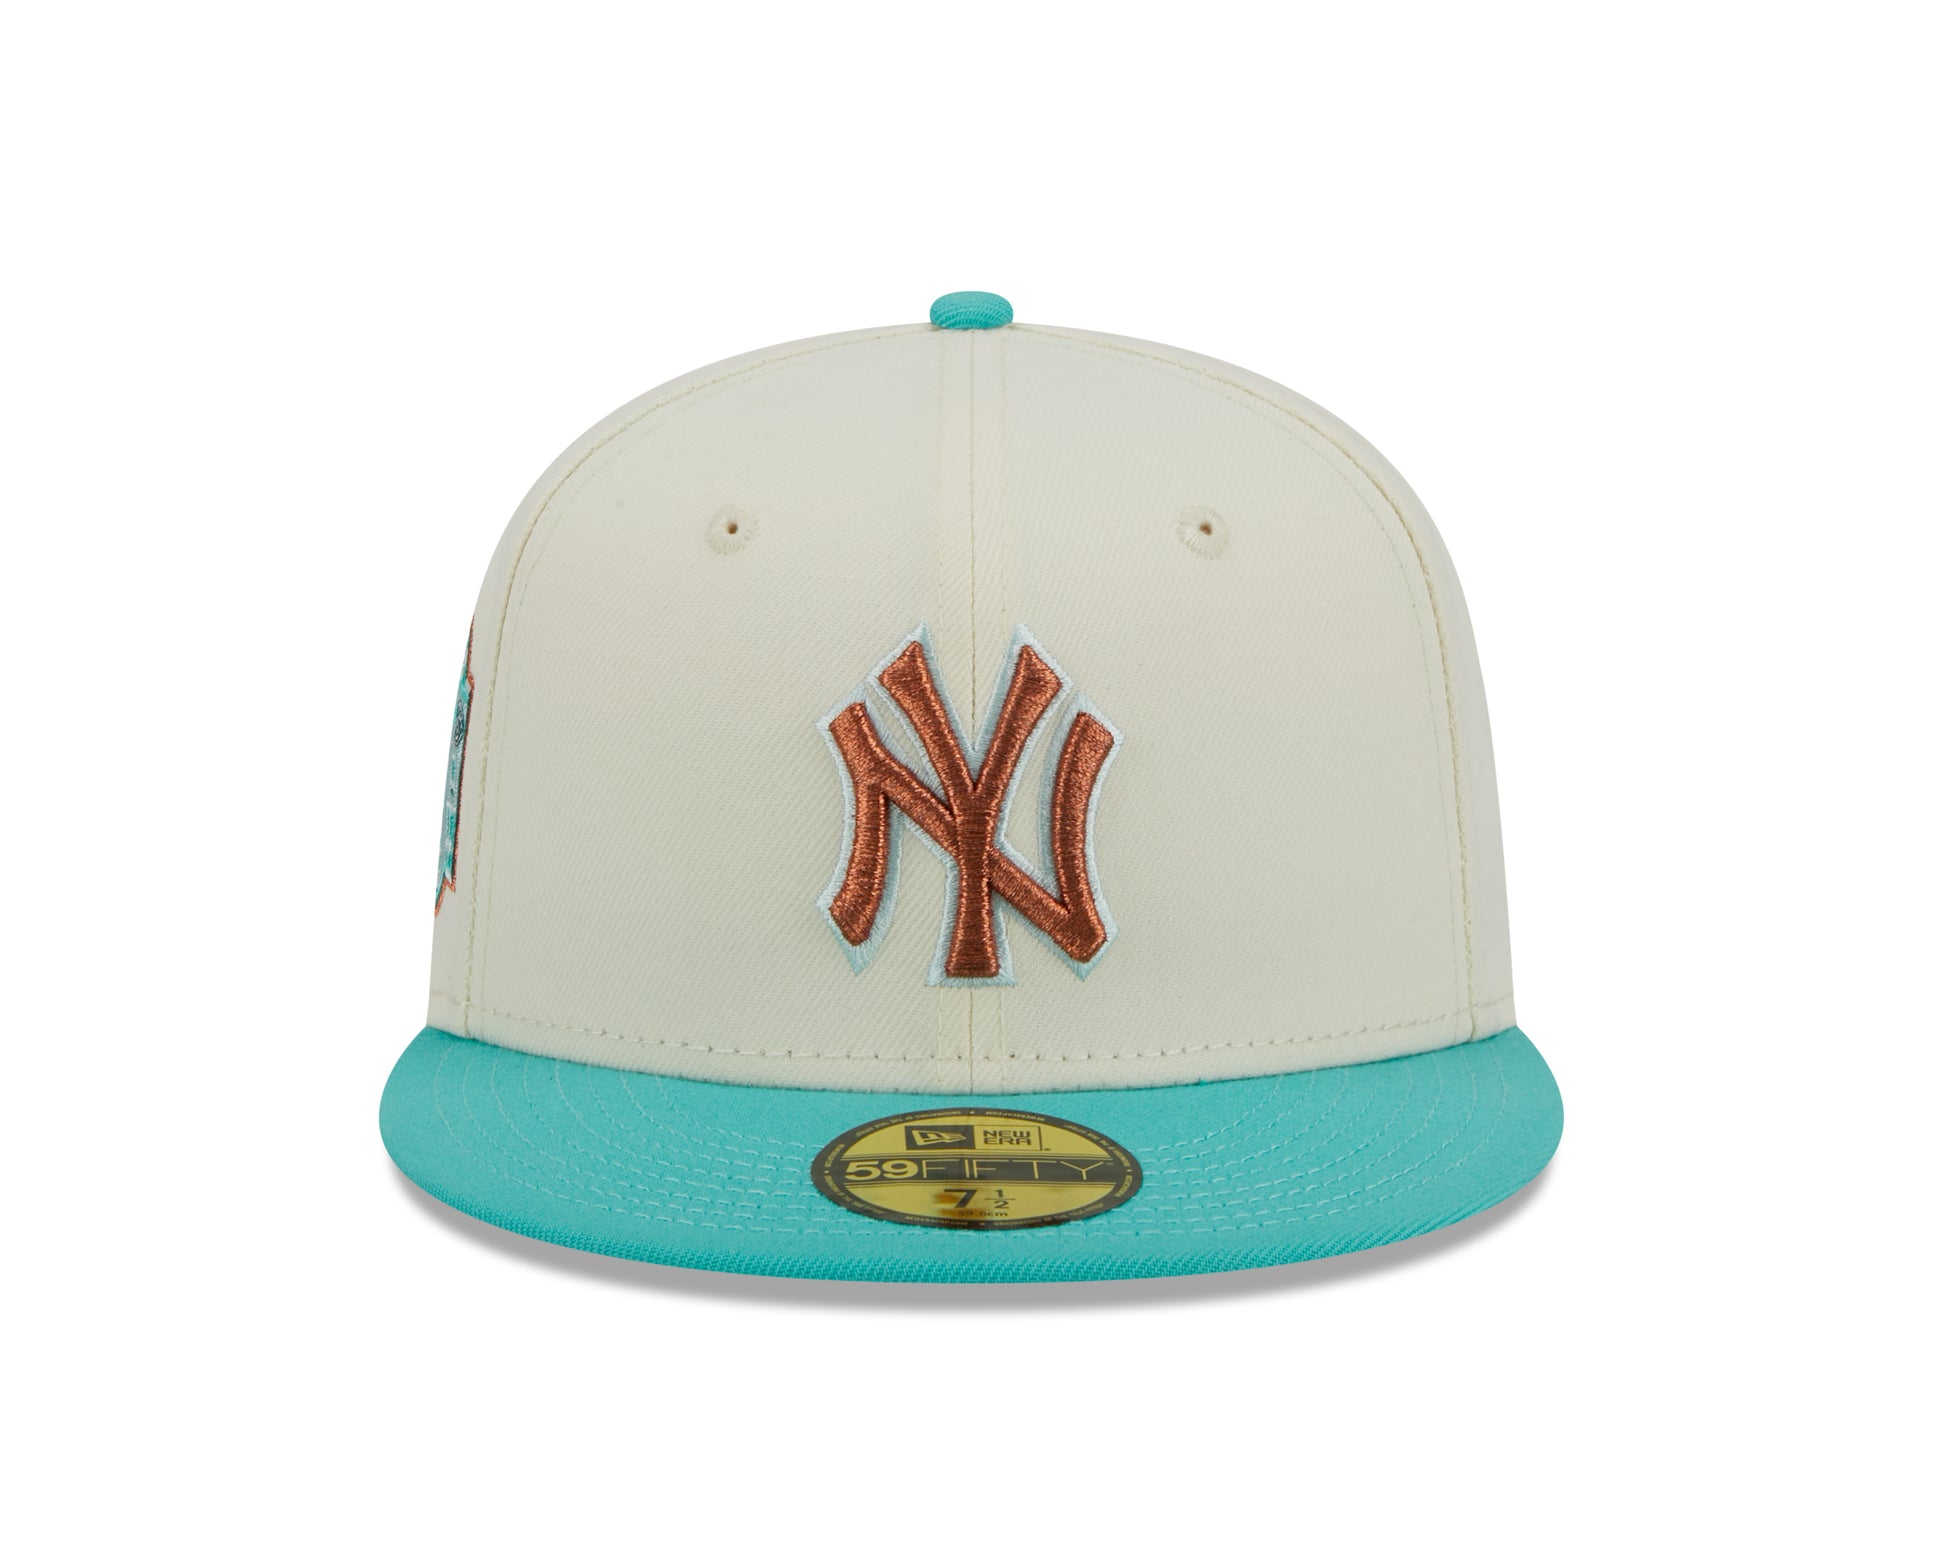 New Era - New York Yankees 59Fifty Fitted City Icon - Chrome White - Headz Up 